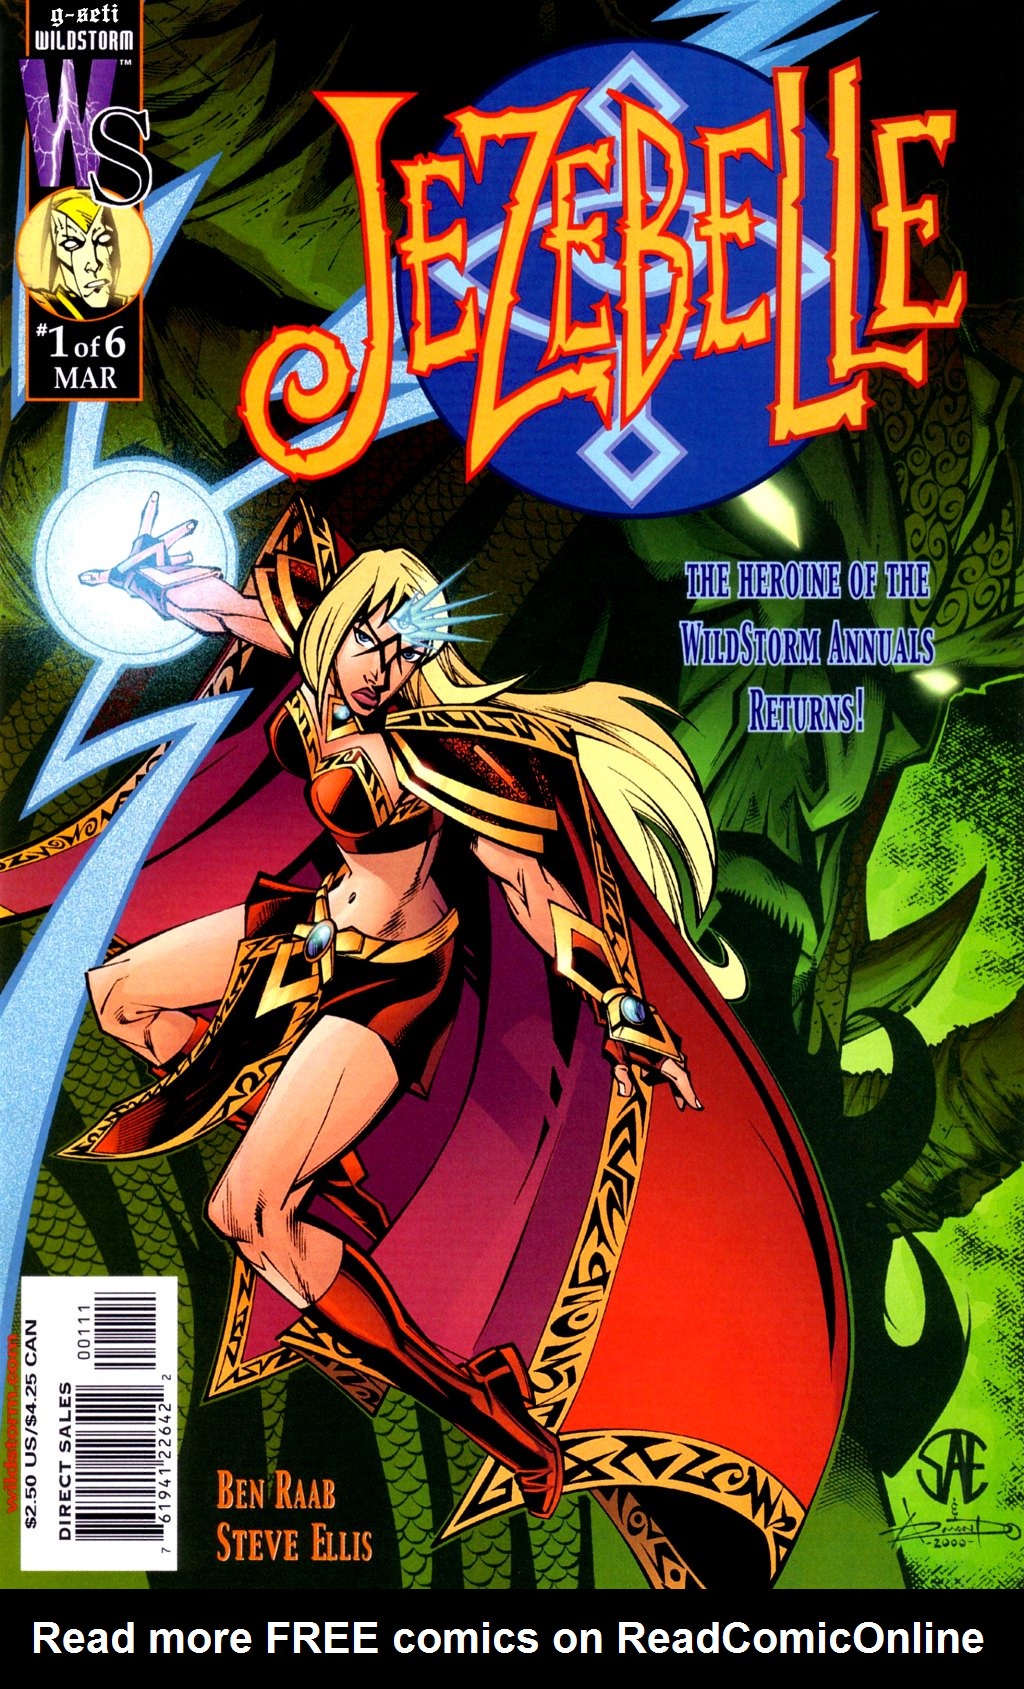 Read online Jezebelle comic -  Issue #1 - 1